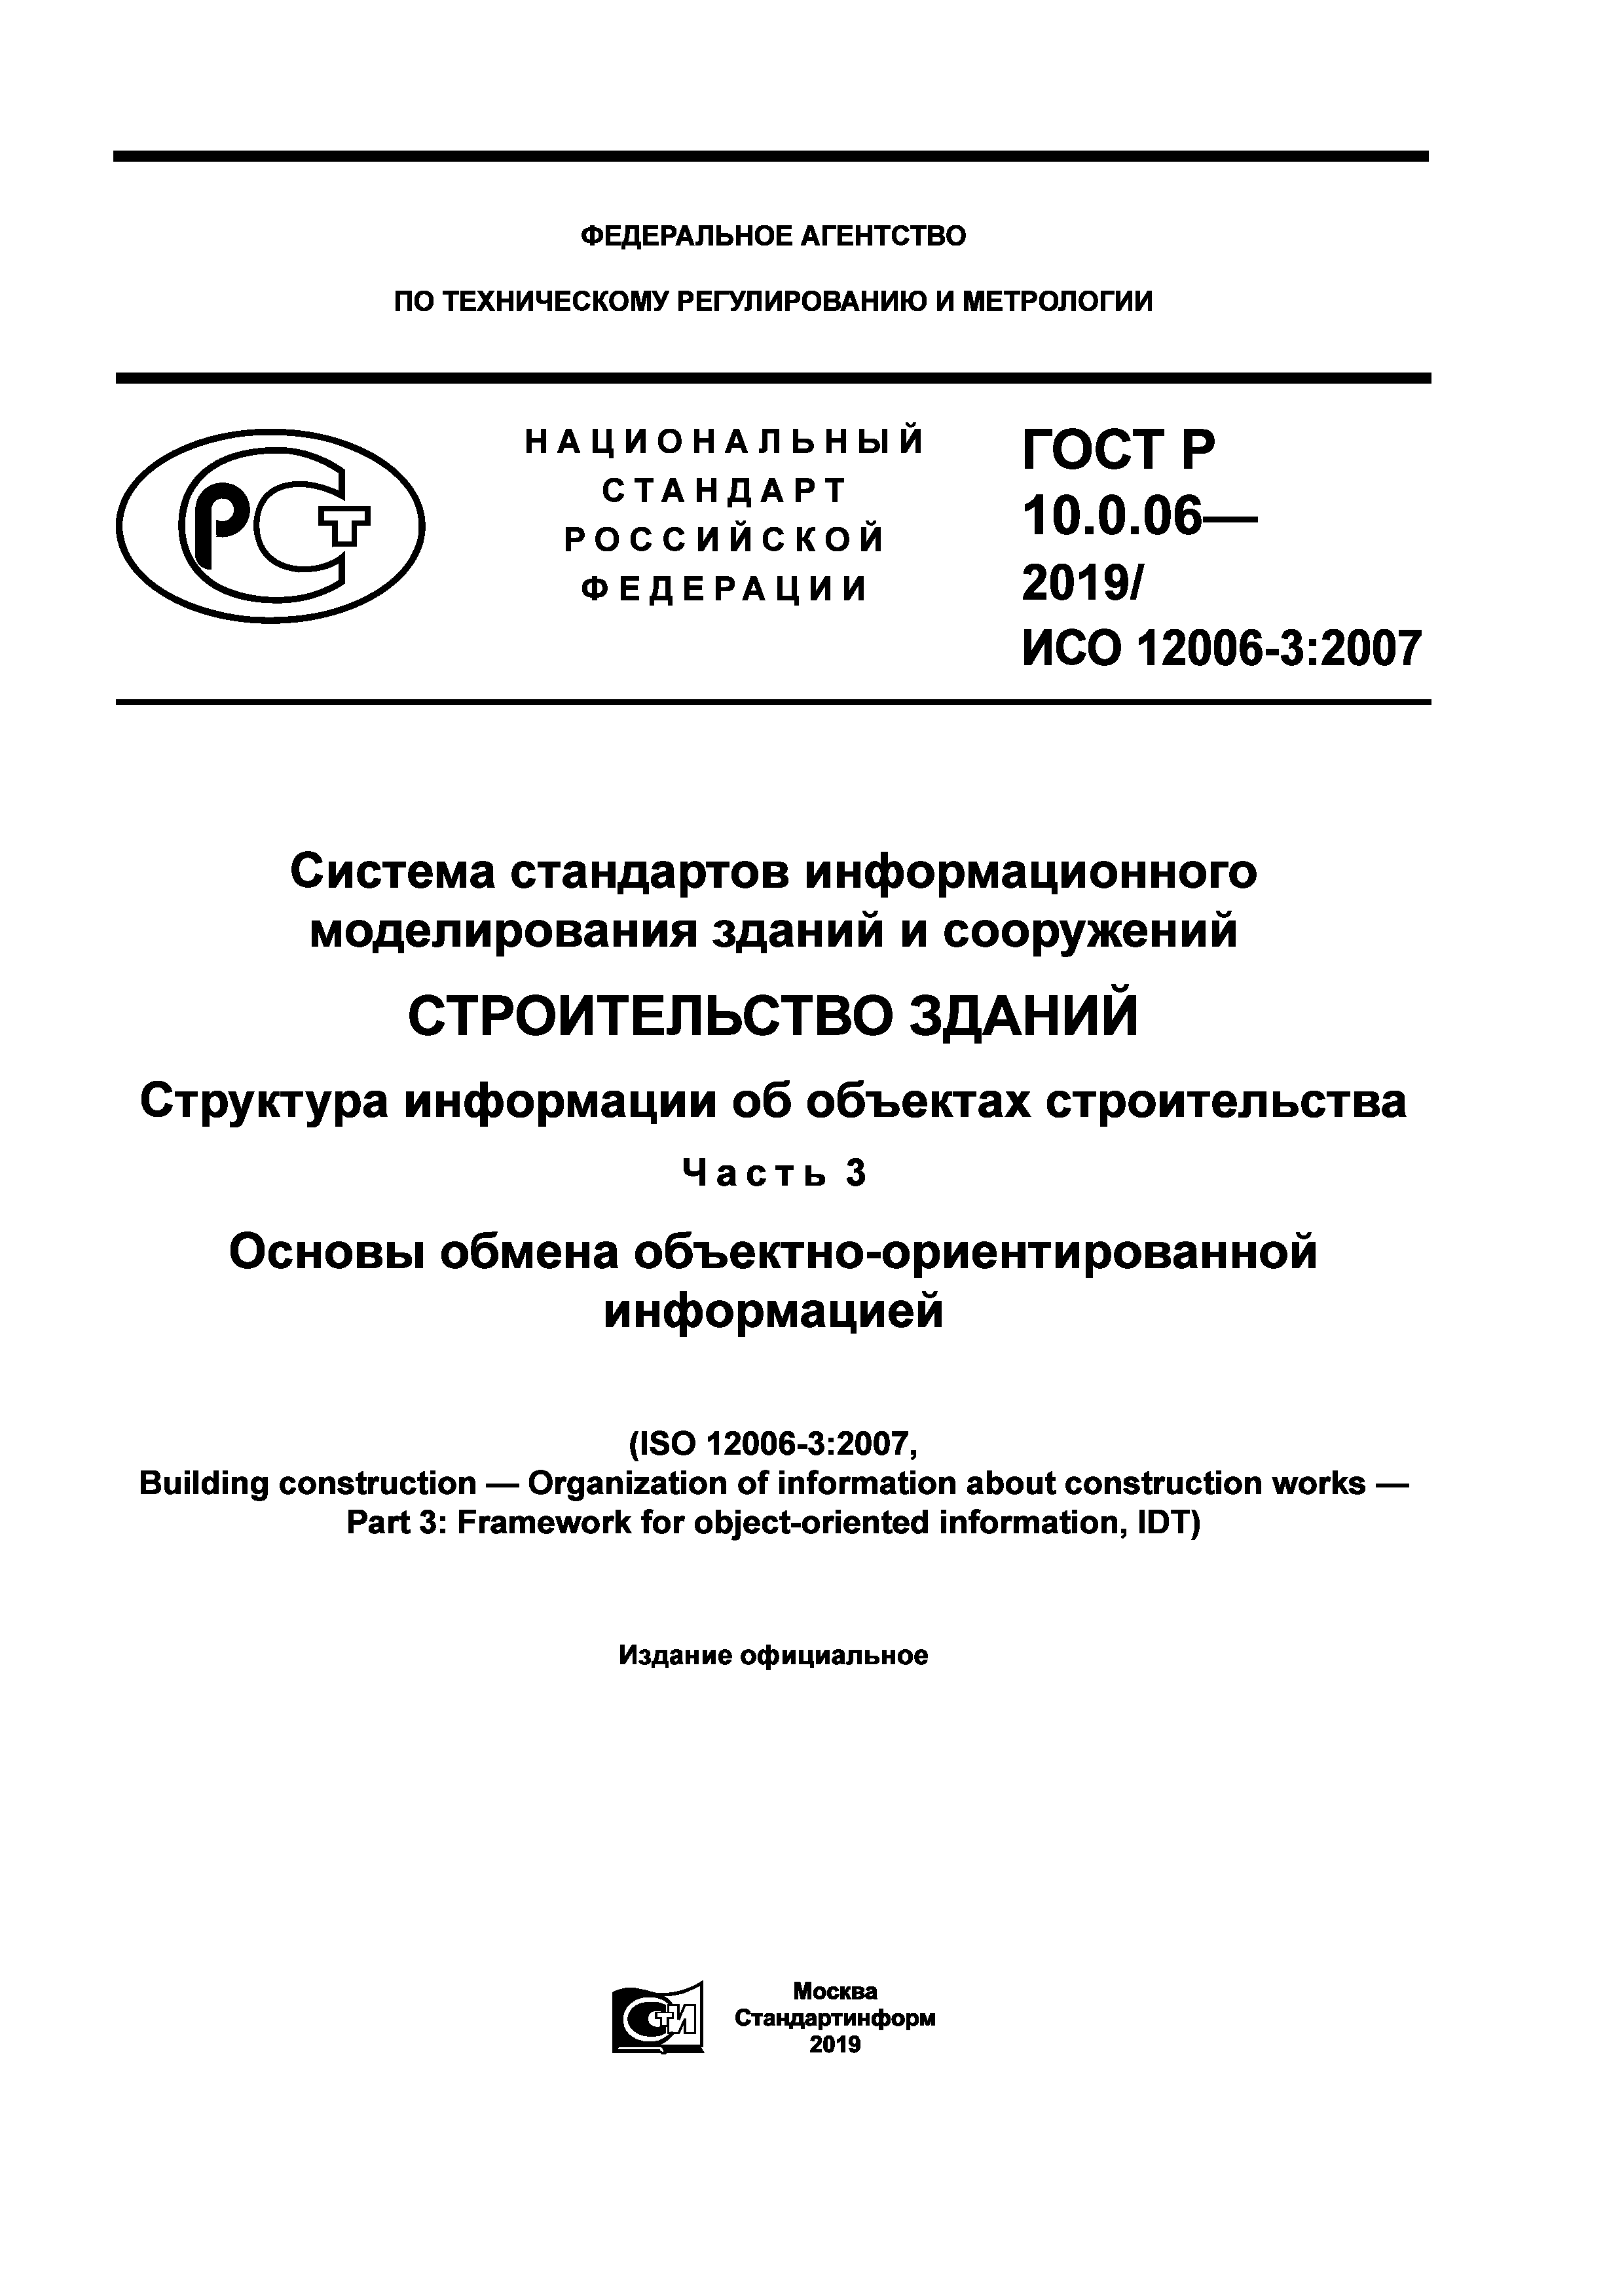 ГОСТ Р 10.0.06-2019